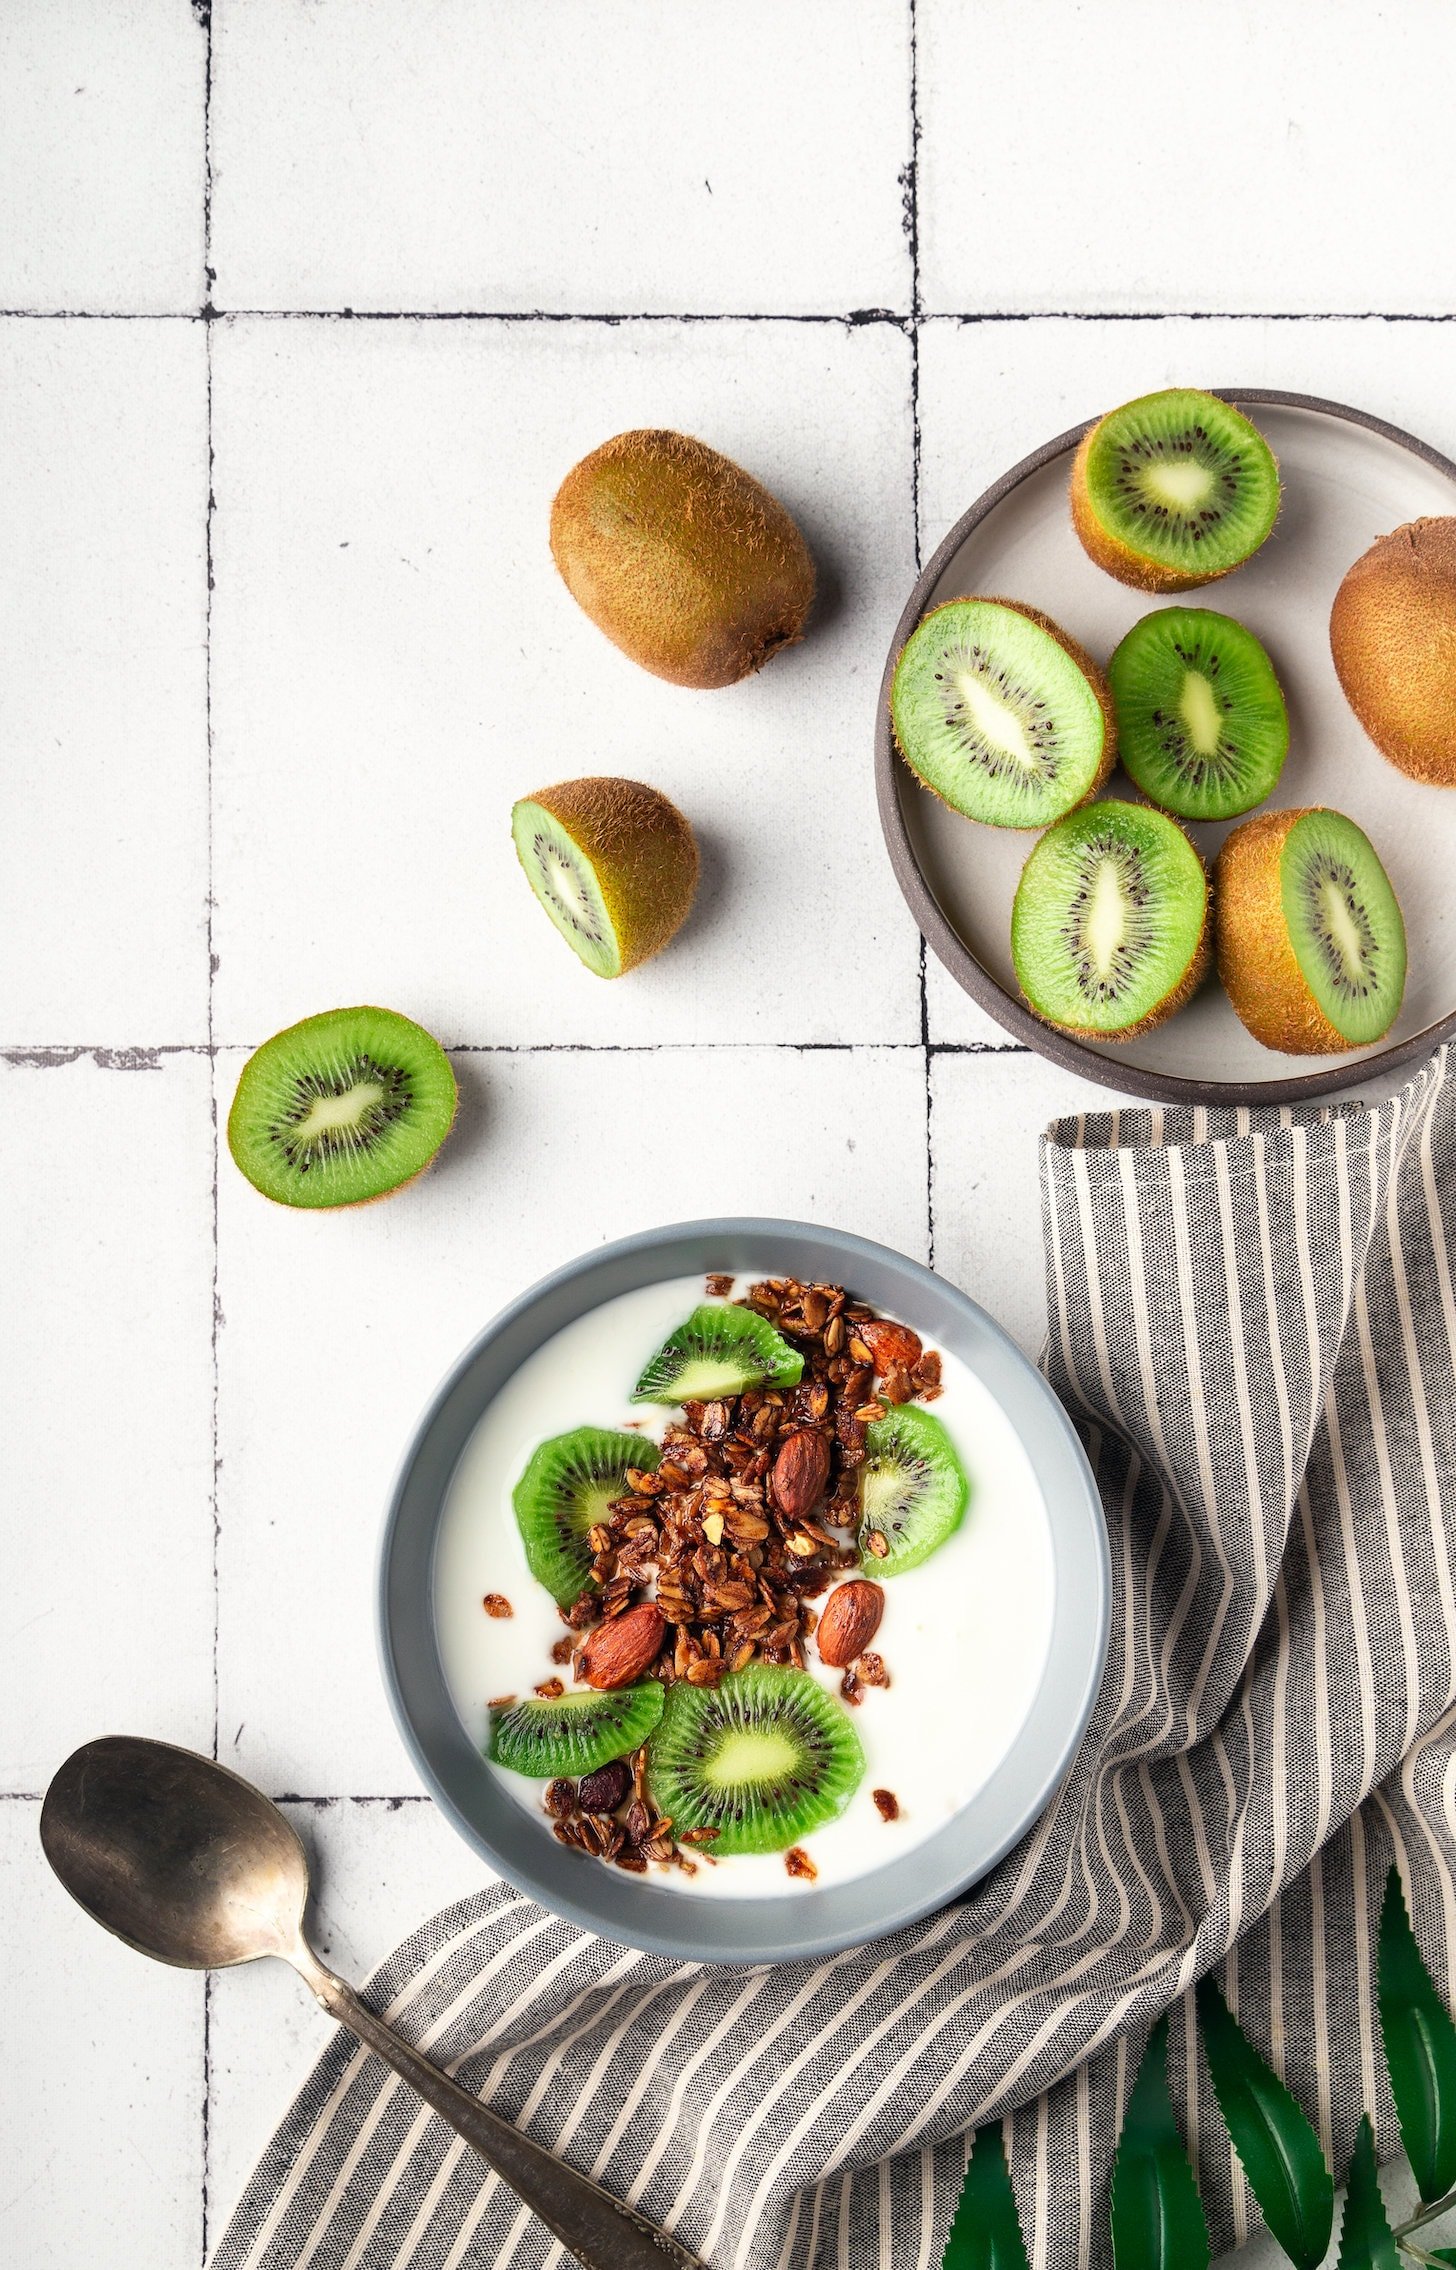 Homemade granola, muesli with kiwi fruit and yogurt on white tile background. Healthy breakfast bowl. Top view.